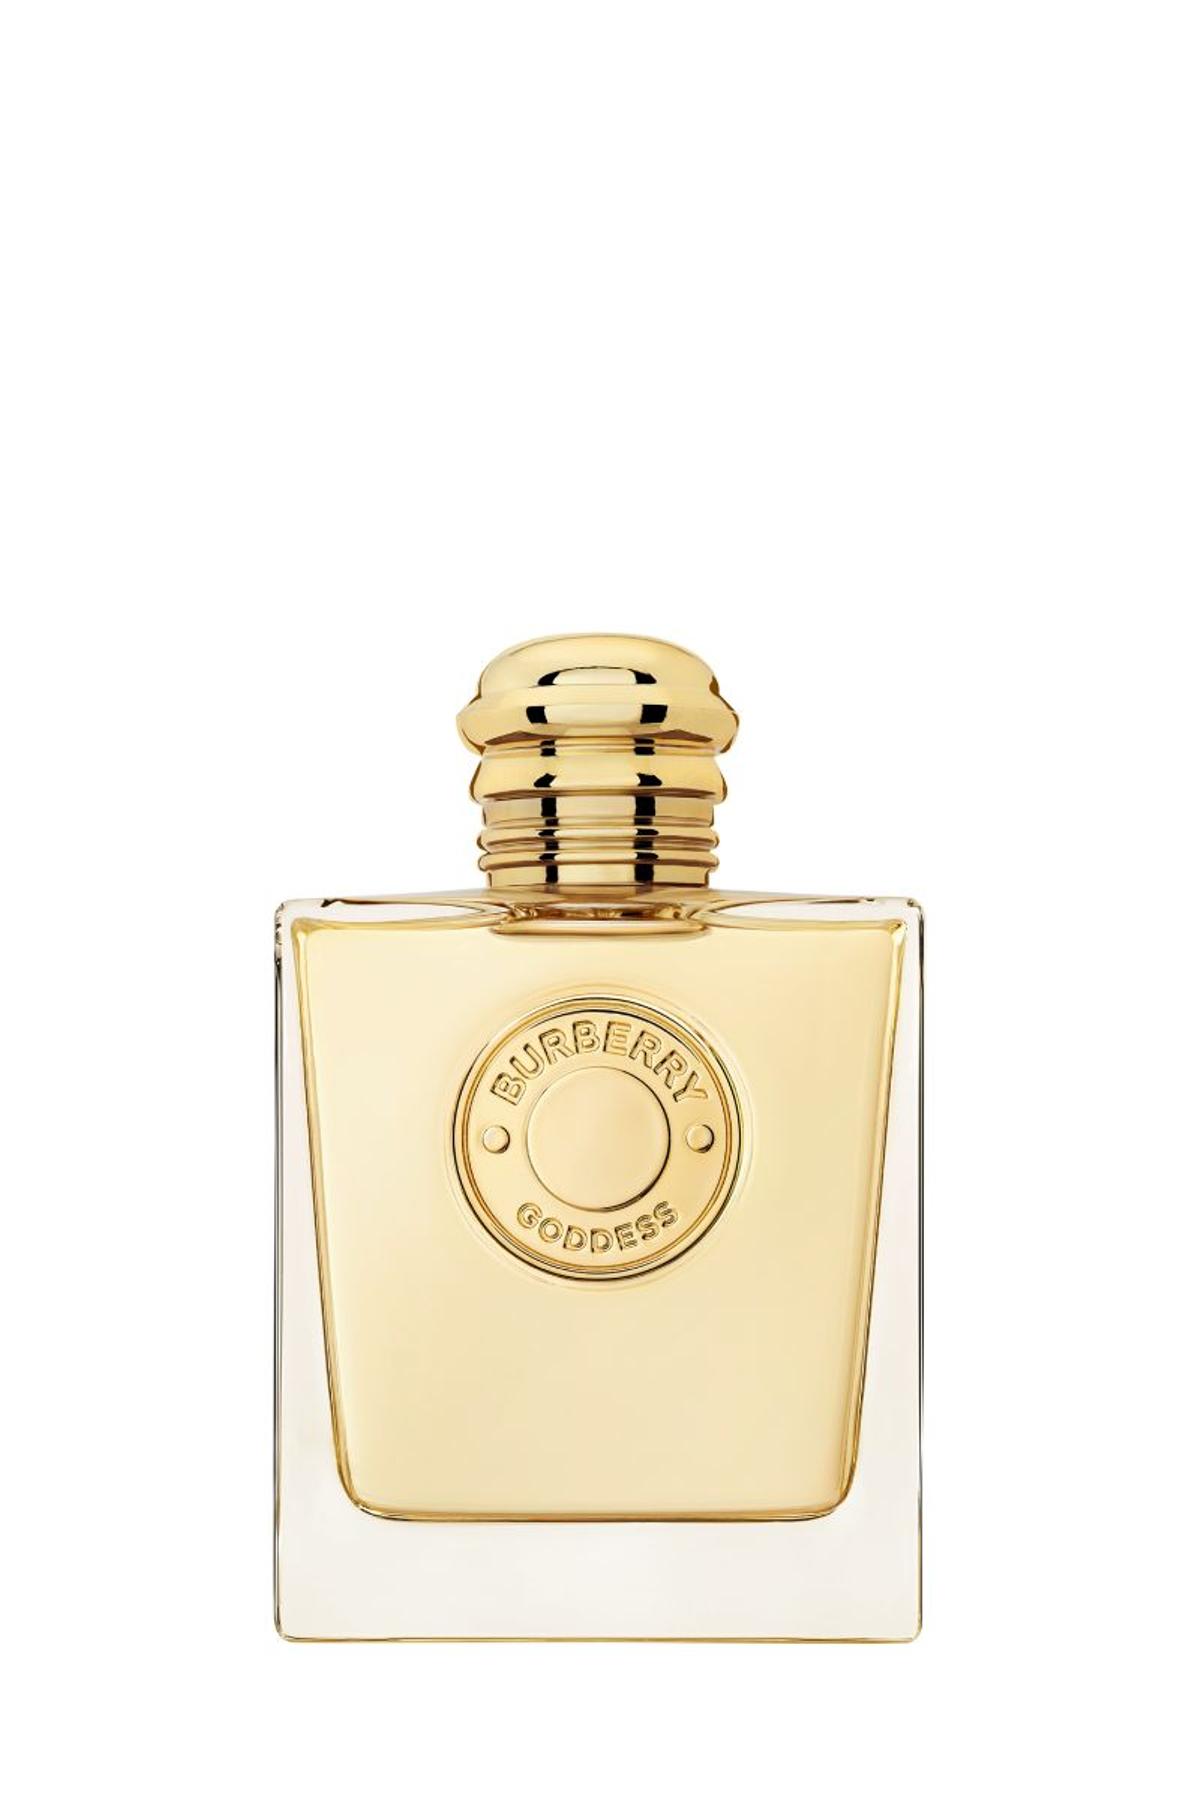 Premio Lanzamiento Perfume: Goddess, de Burberry